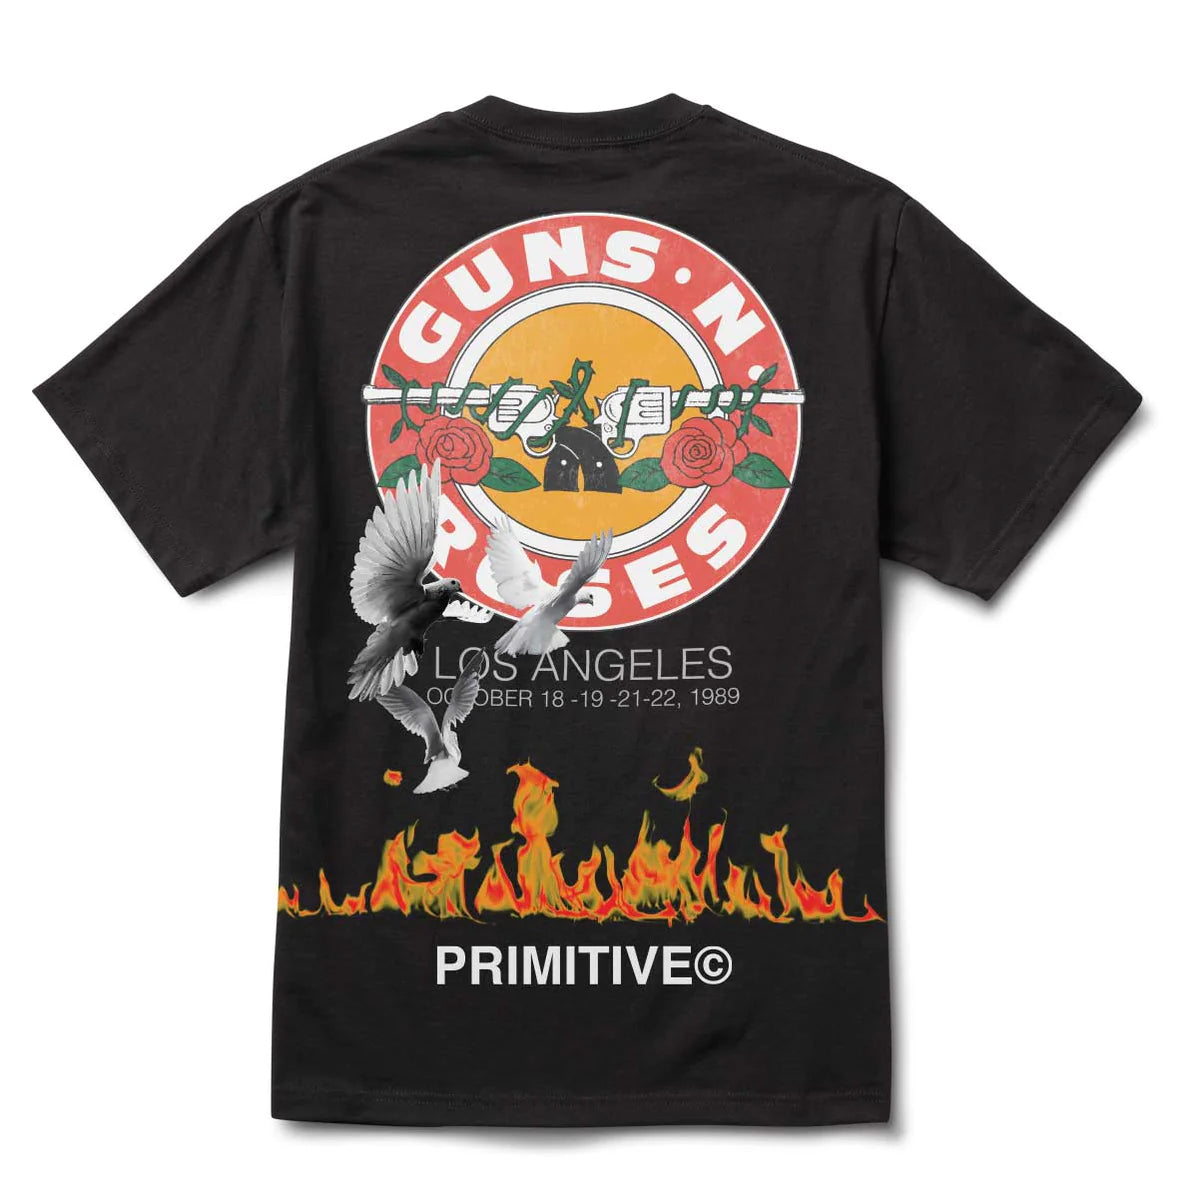 Primitive x Guns N' Roses: Next Door Tee (Black)